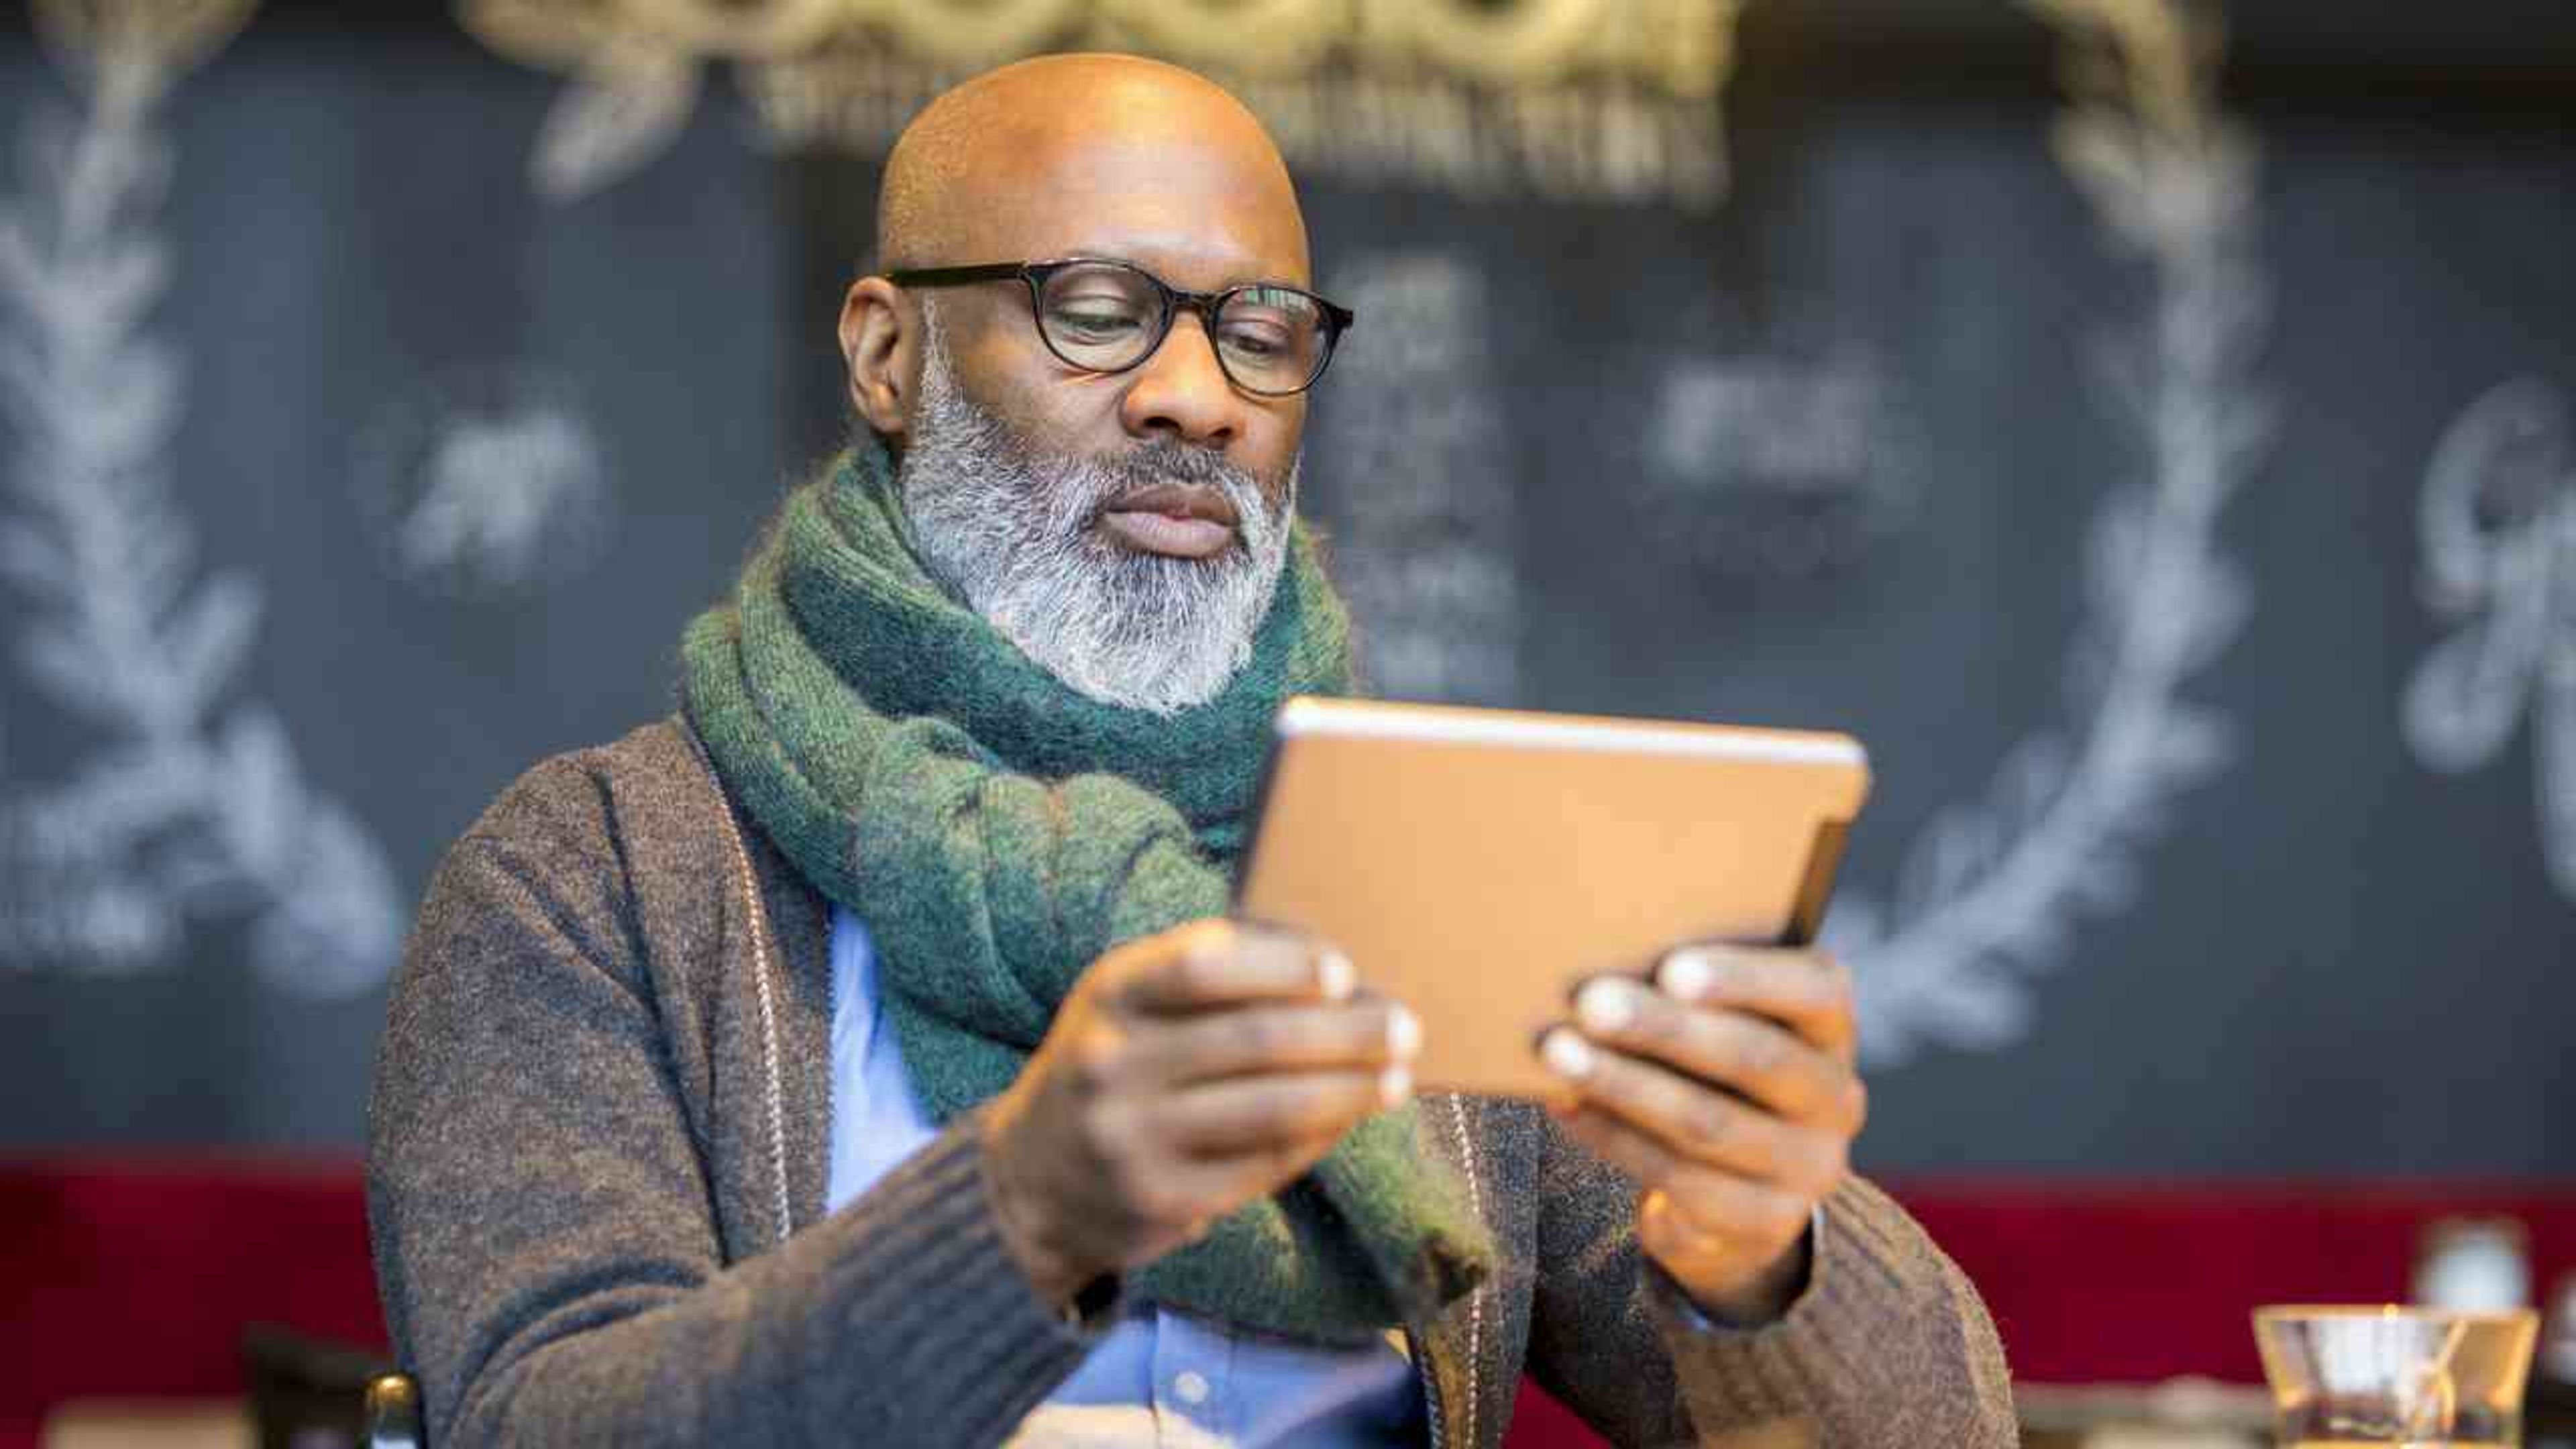 Portrait Of Man Using Tablet In A Coffee Shop 2022 12 16 22 06 19 Utc